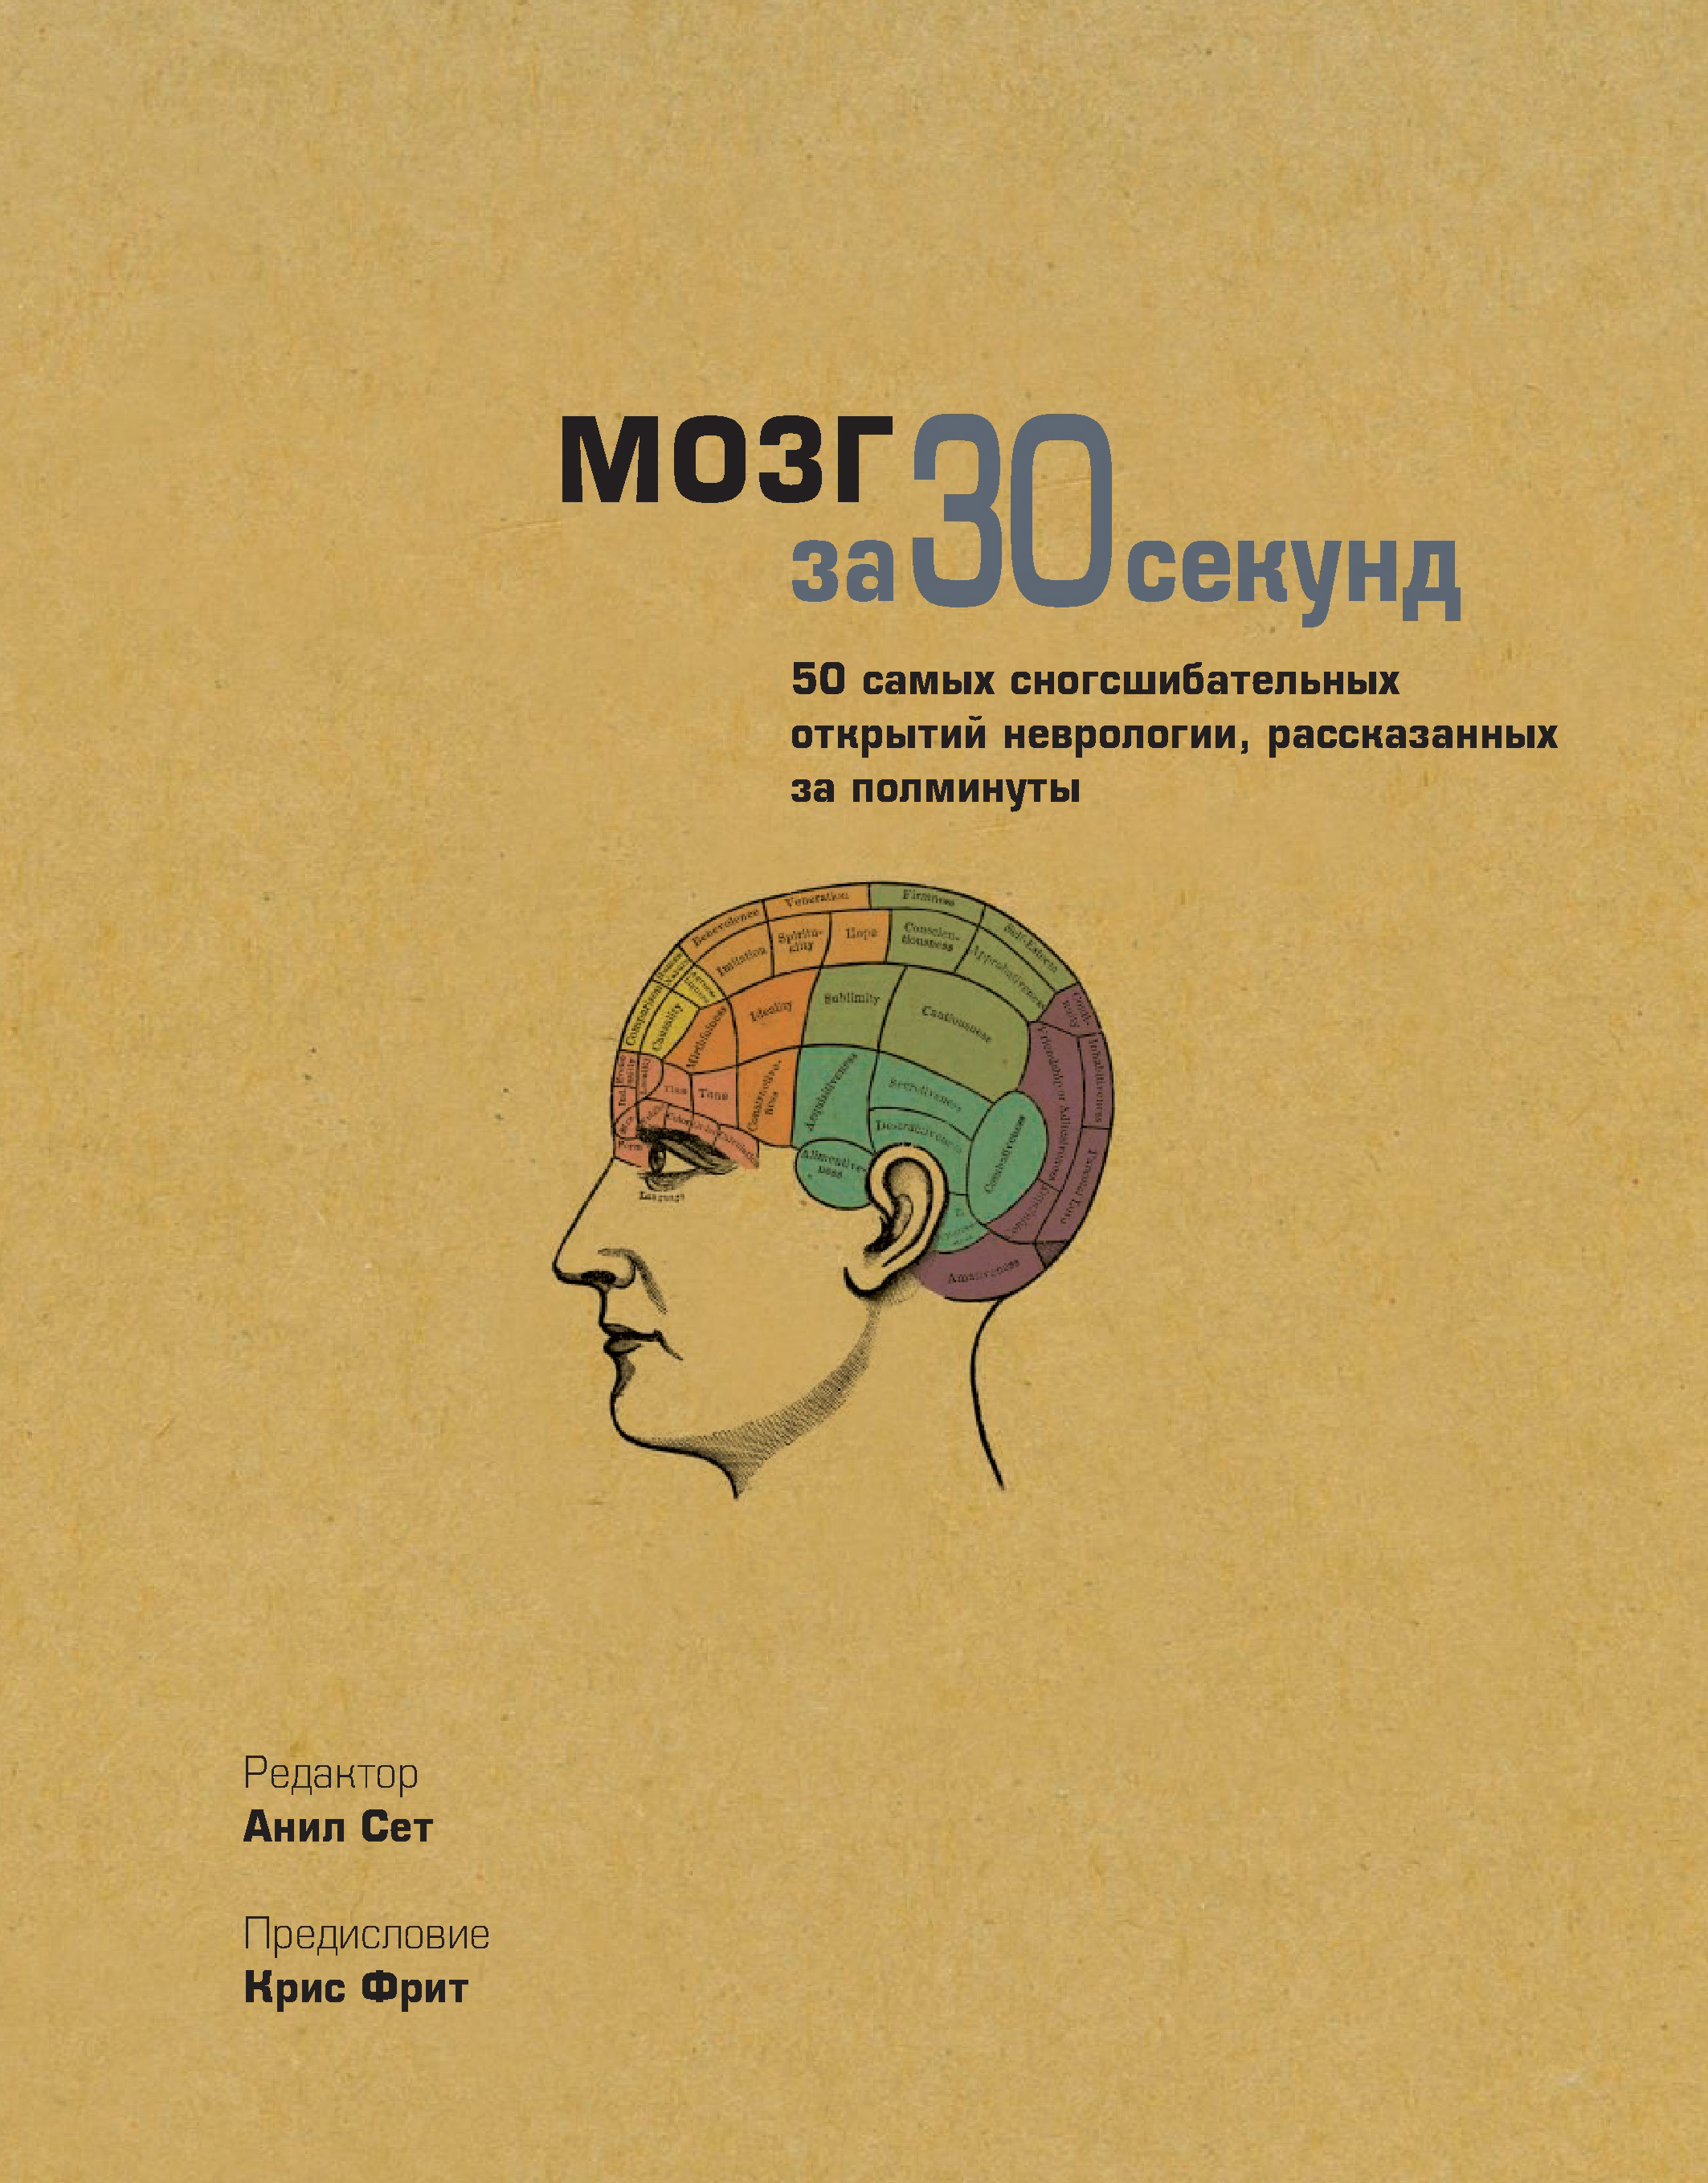 Book brain. Книга мозг. За 30 секунд книги. Книга про мозг человека. Потребности мозга книга.